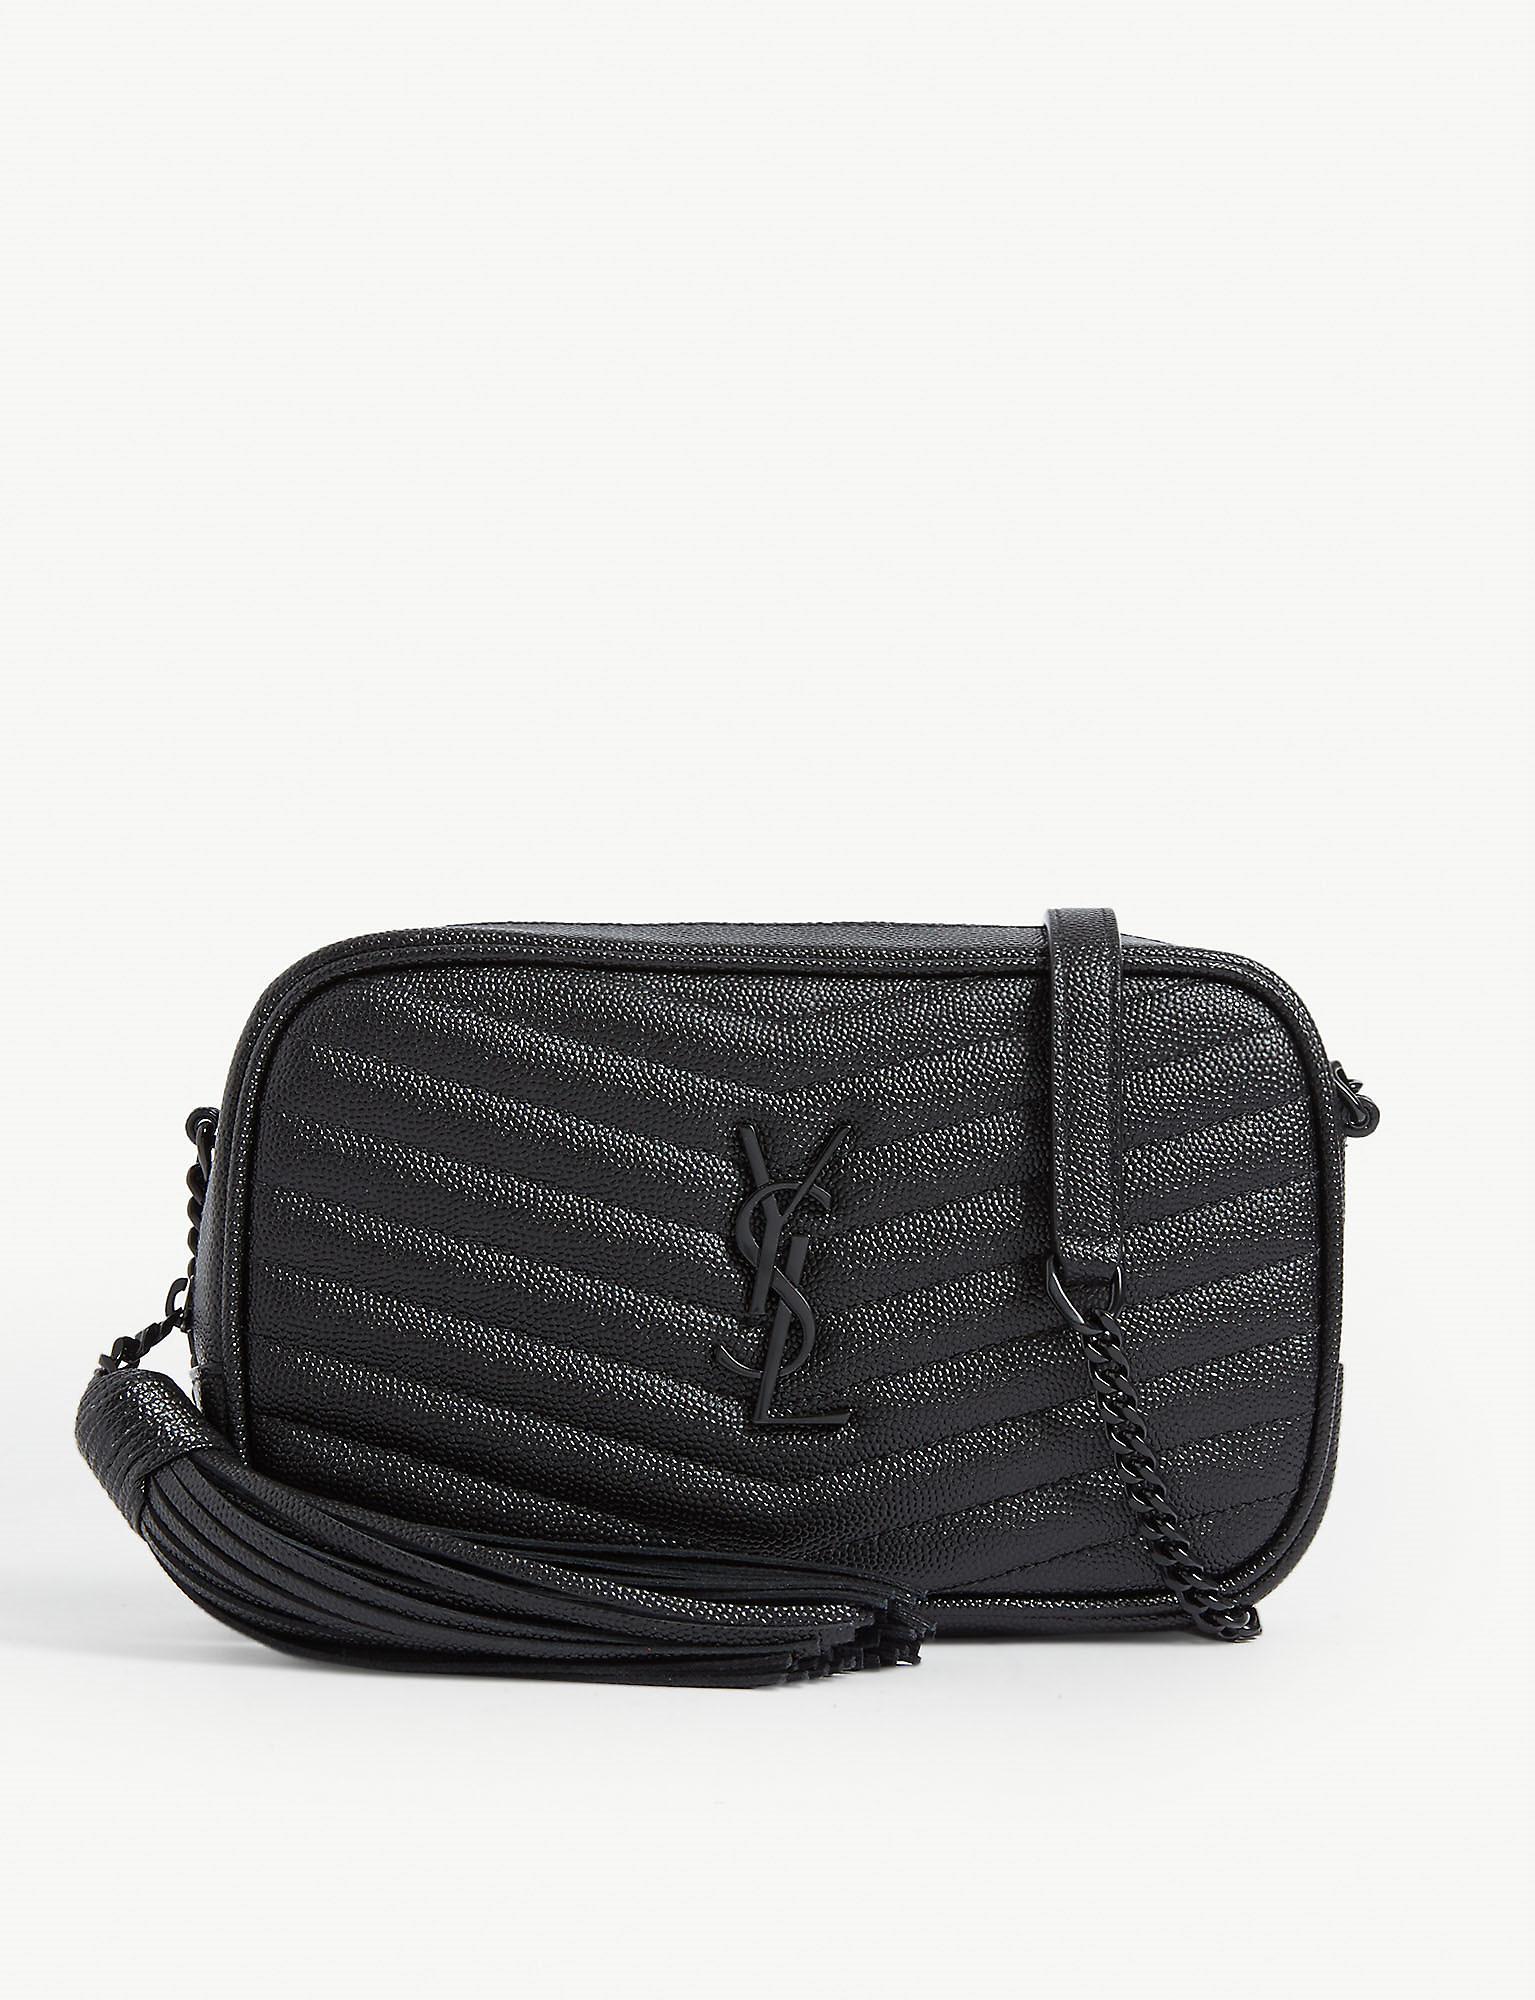 Saint Laurent Mini Lou Quilted Leather Camera Bag in Black/Black (Black) - Lyst